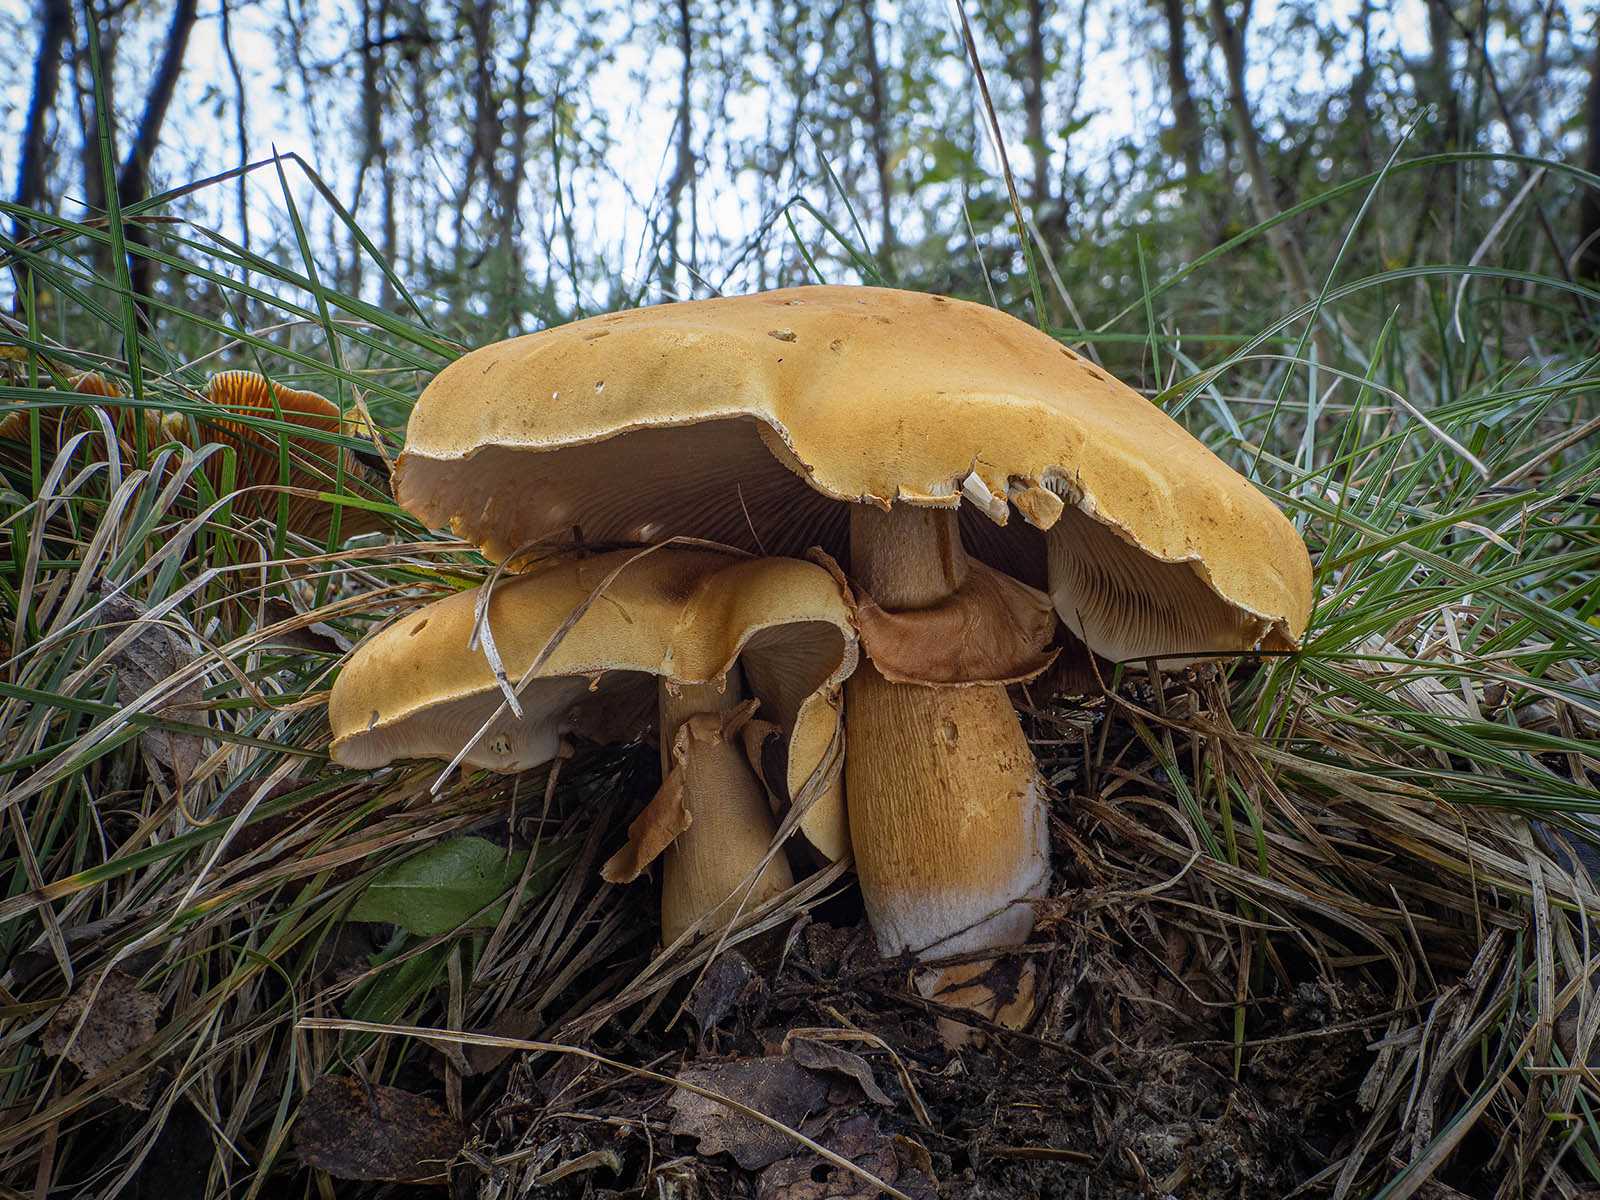 Phaeolepiota aurea, golden bootleg mushroom